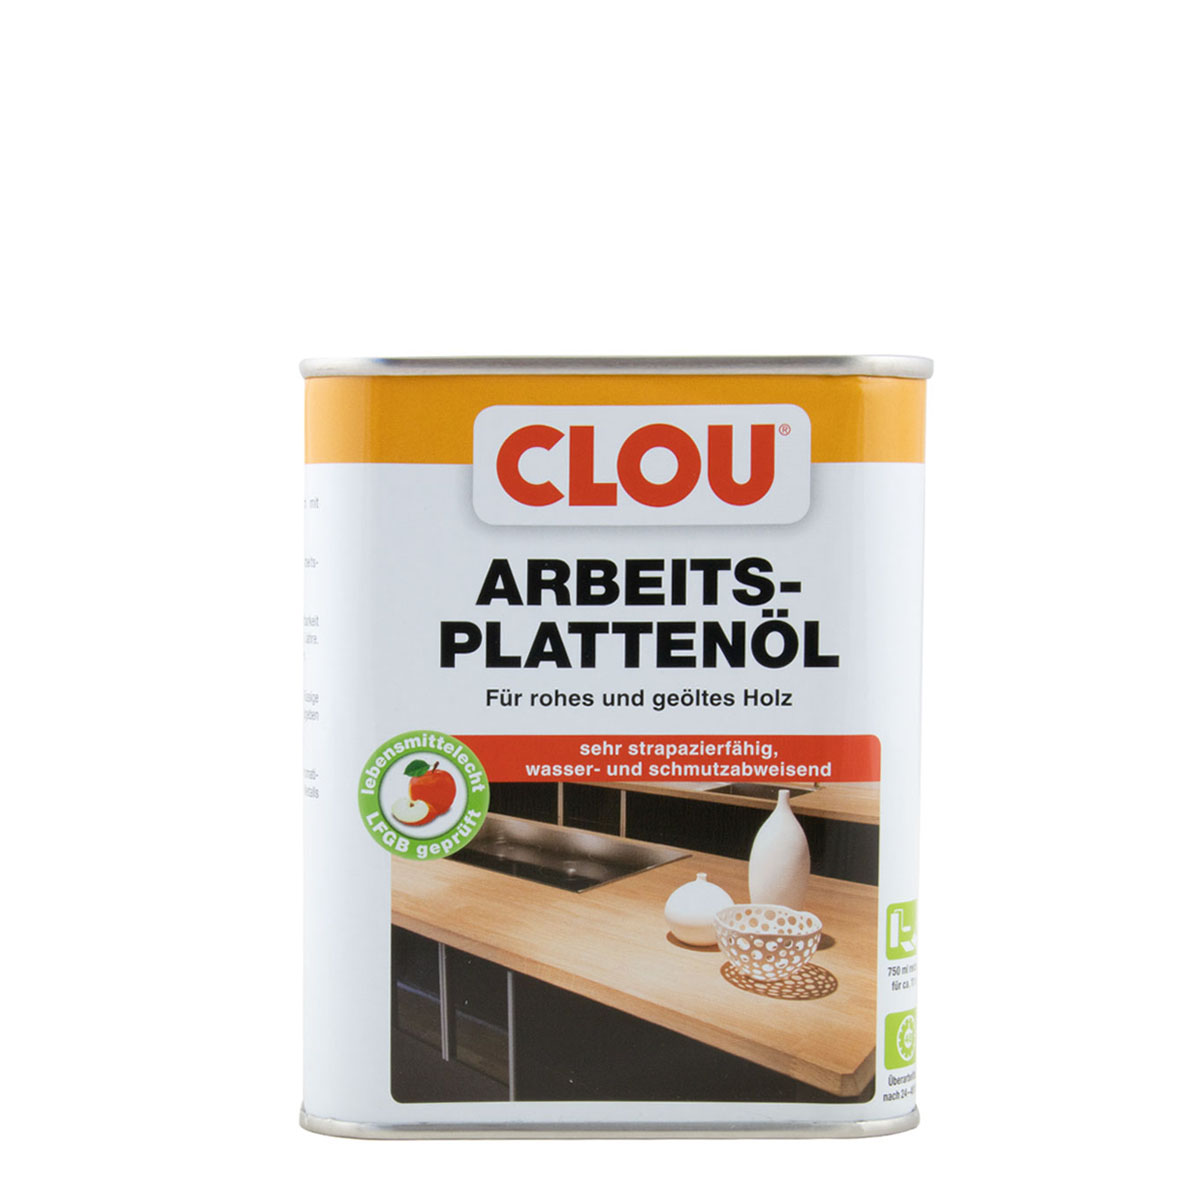 Clou Arbeitsplattenöl 750ml farblos; Küchenarbeitsplattenöl